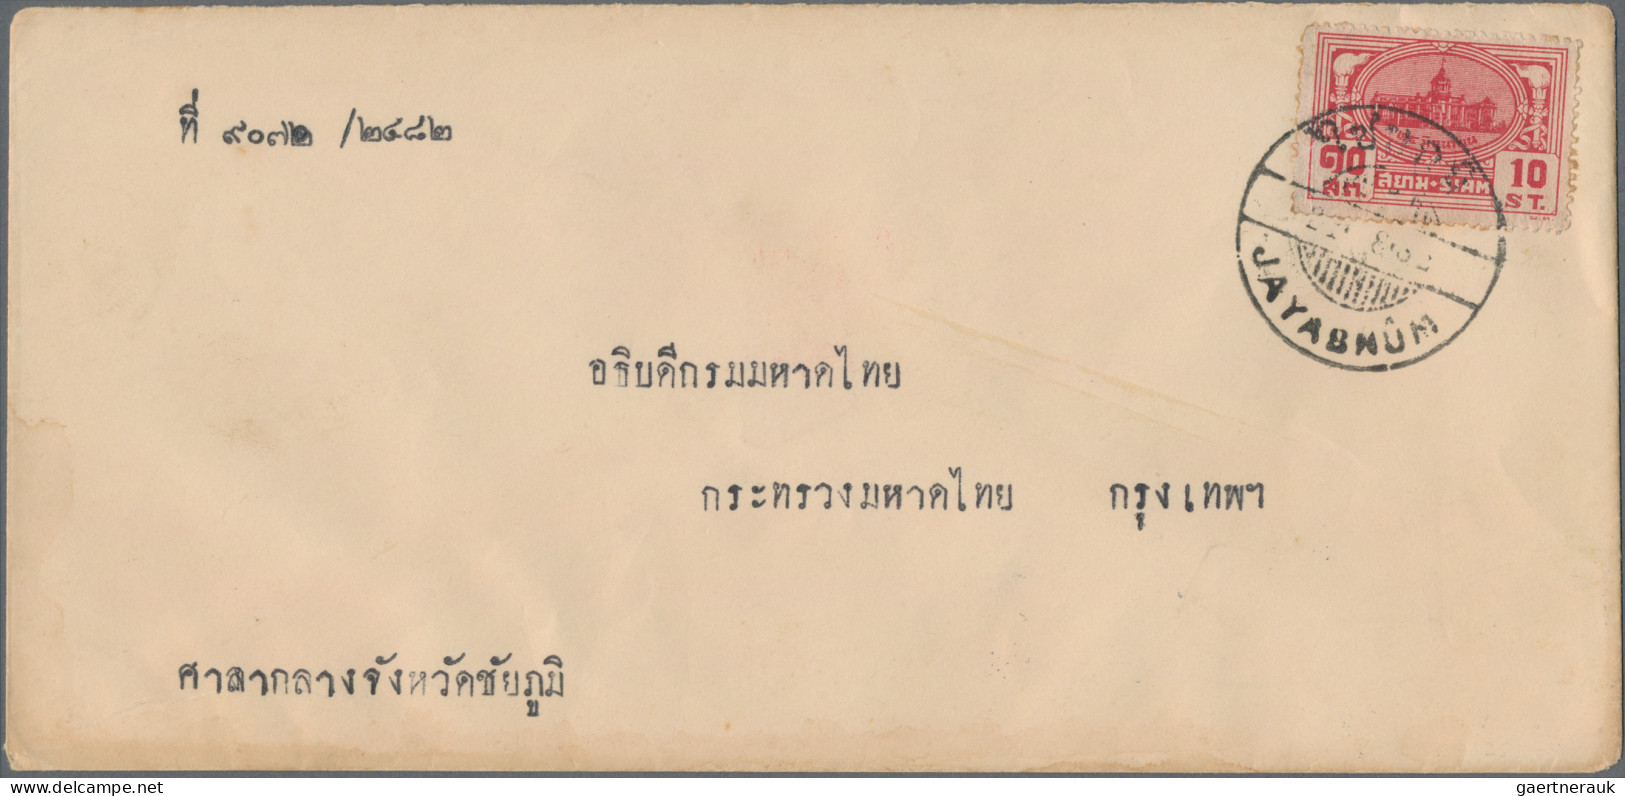 Thailand: 1940 "Jayabhûm": Official Mail Envelope With Garuda Imprint On Reverse - Thailand